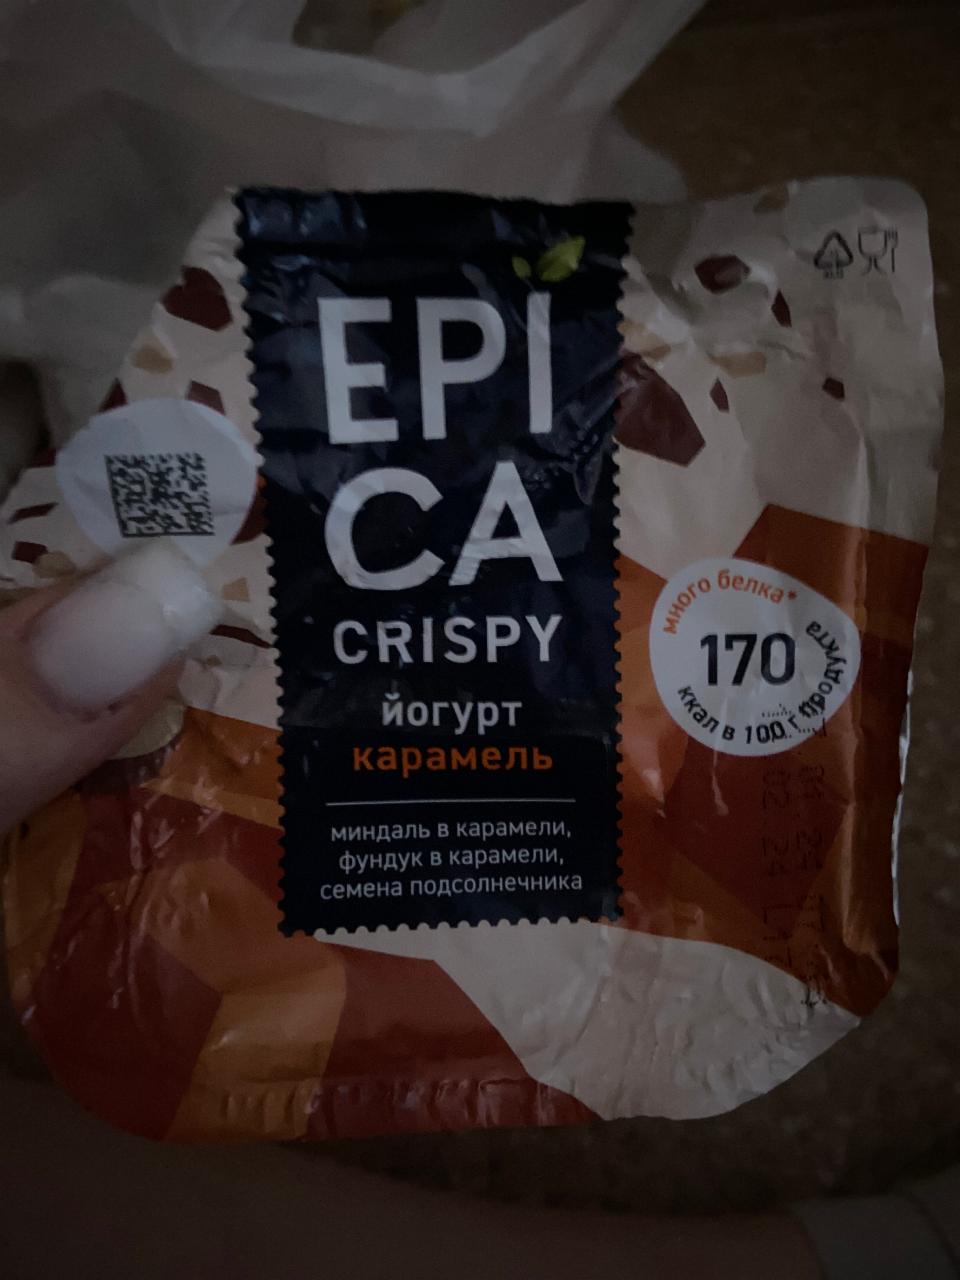 Фото - Йогурт карамель, миндаль, фундук, семена подсолнечника Epica crispy